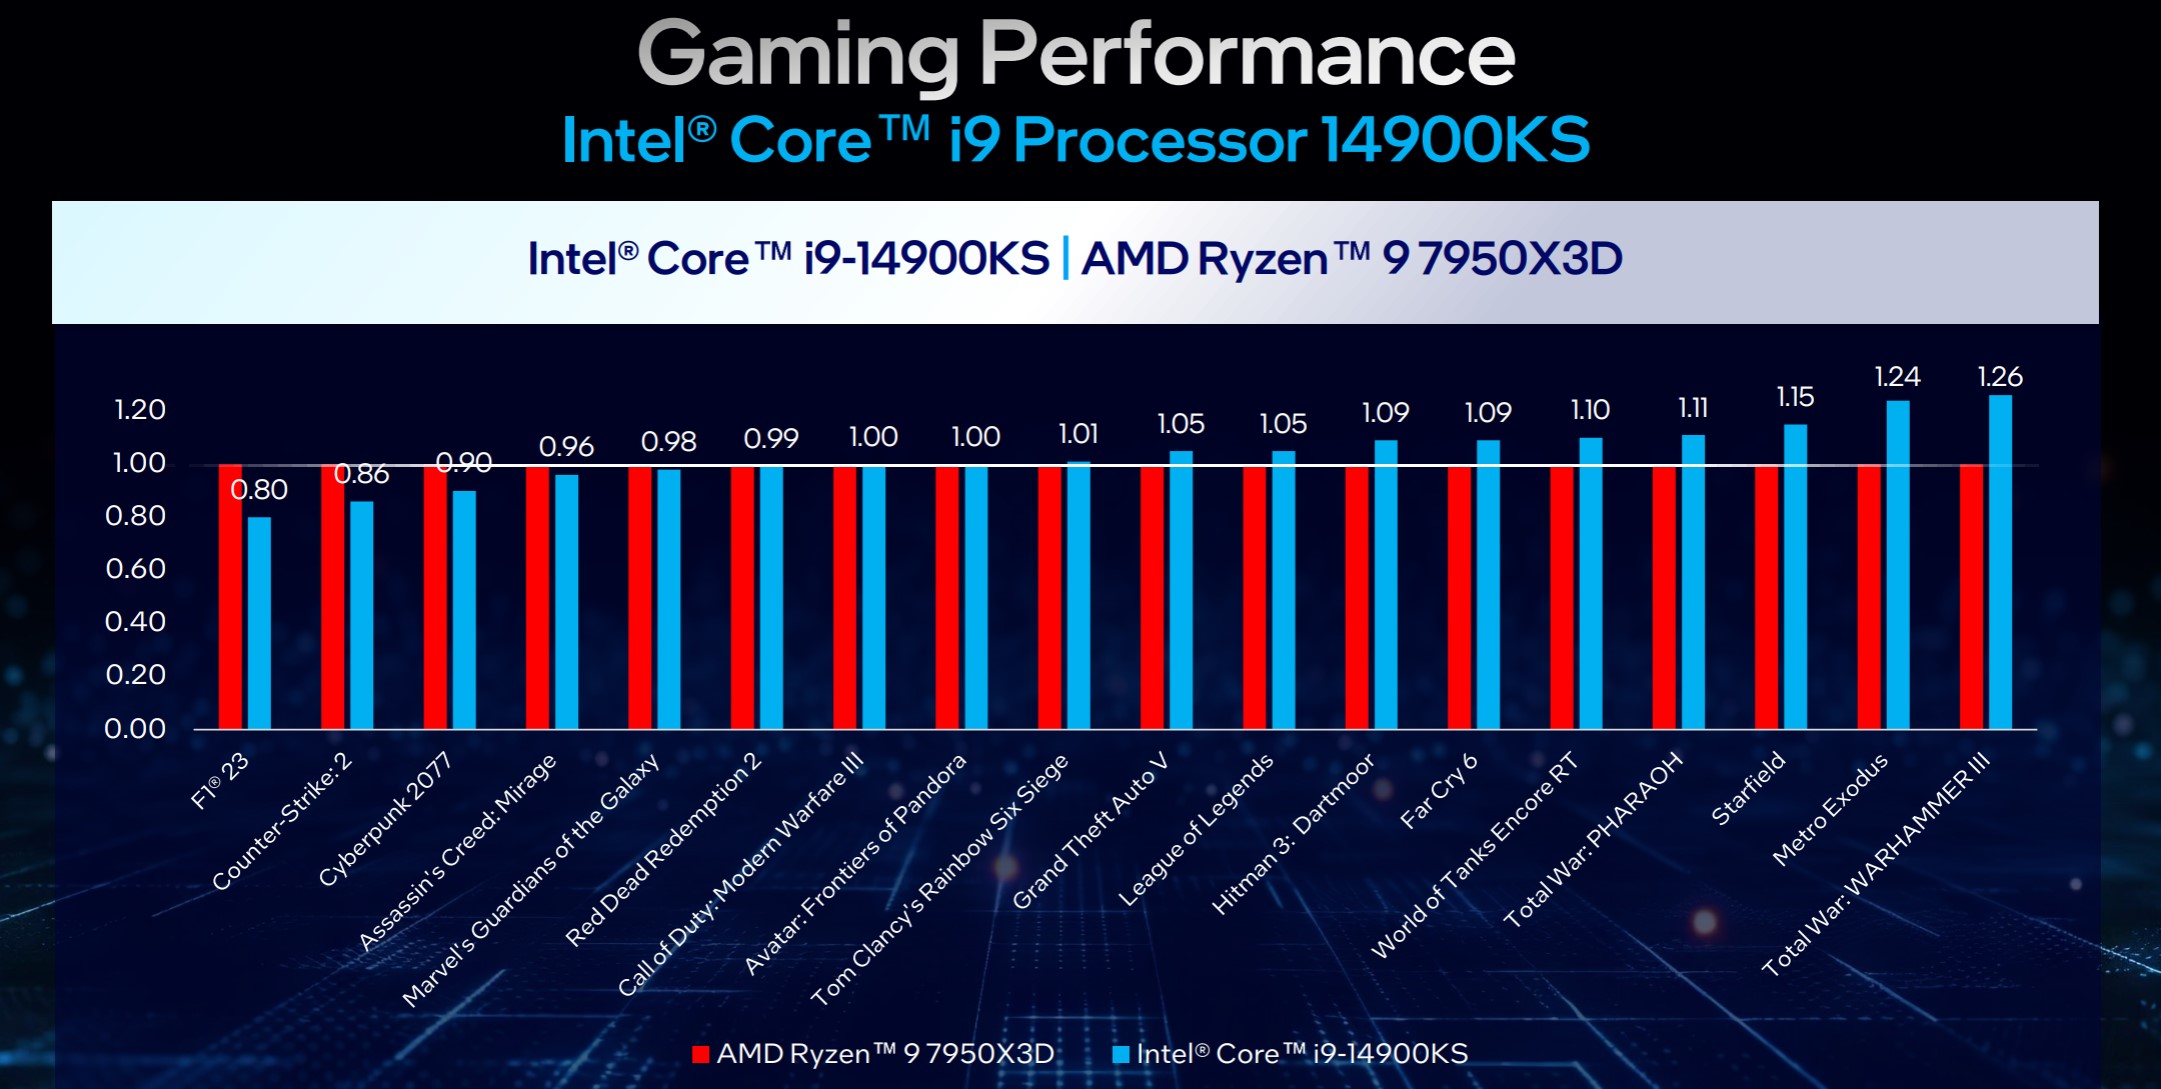 Intel Core i9-14900KS compared to AMD Ryzen 9 7950X3D.